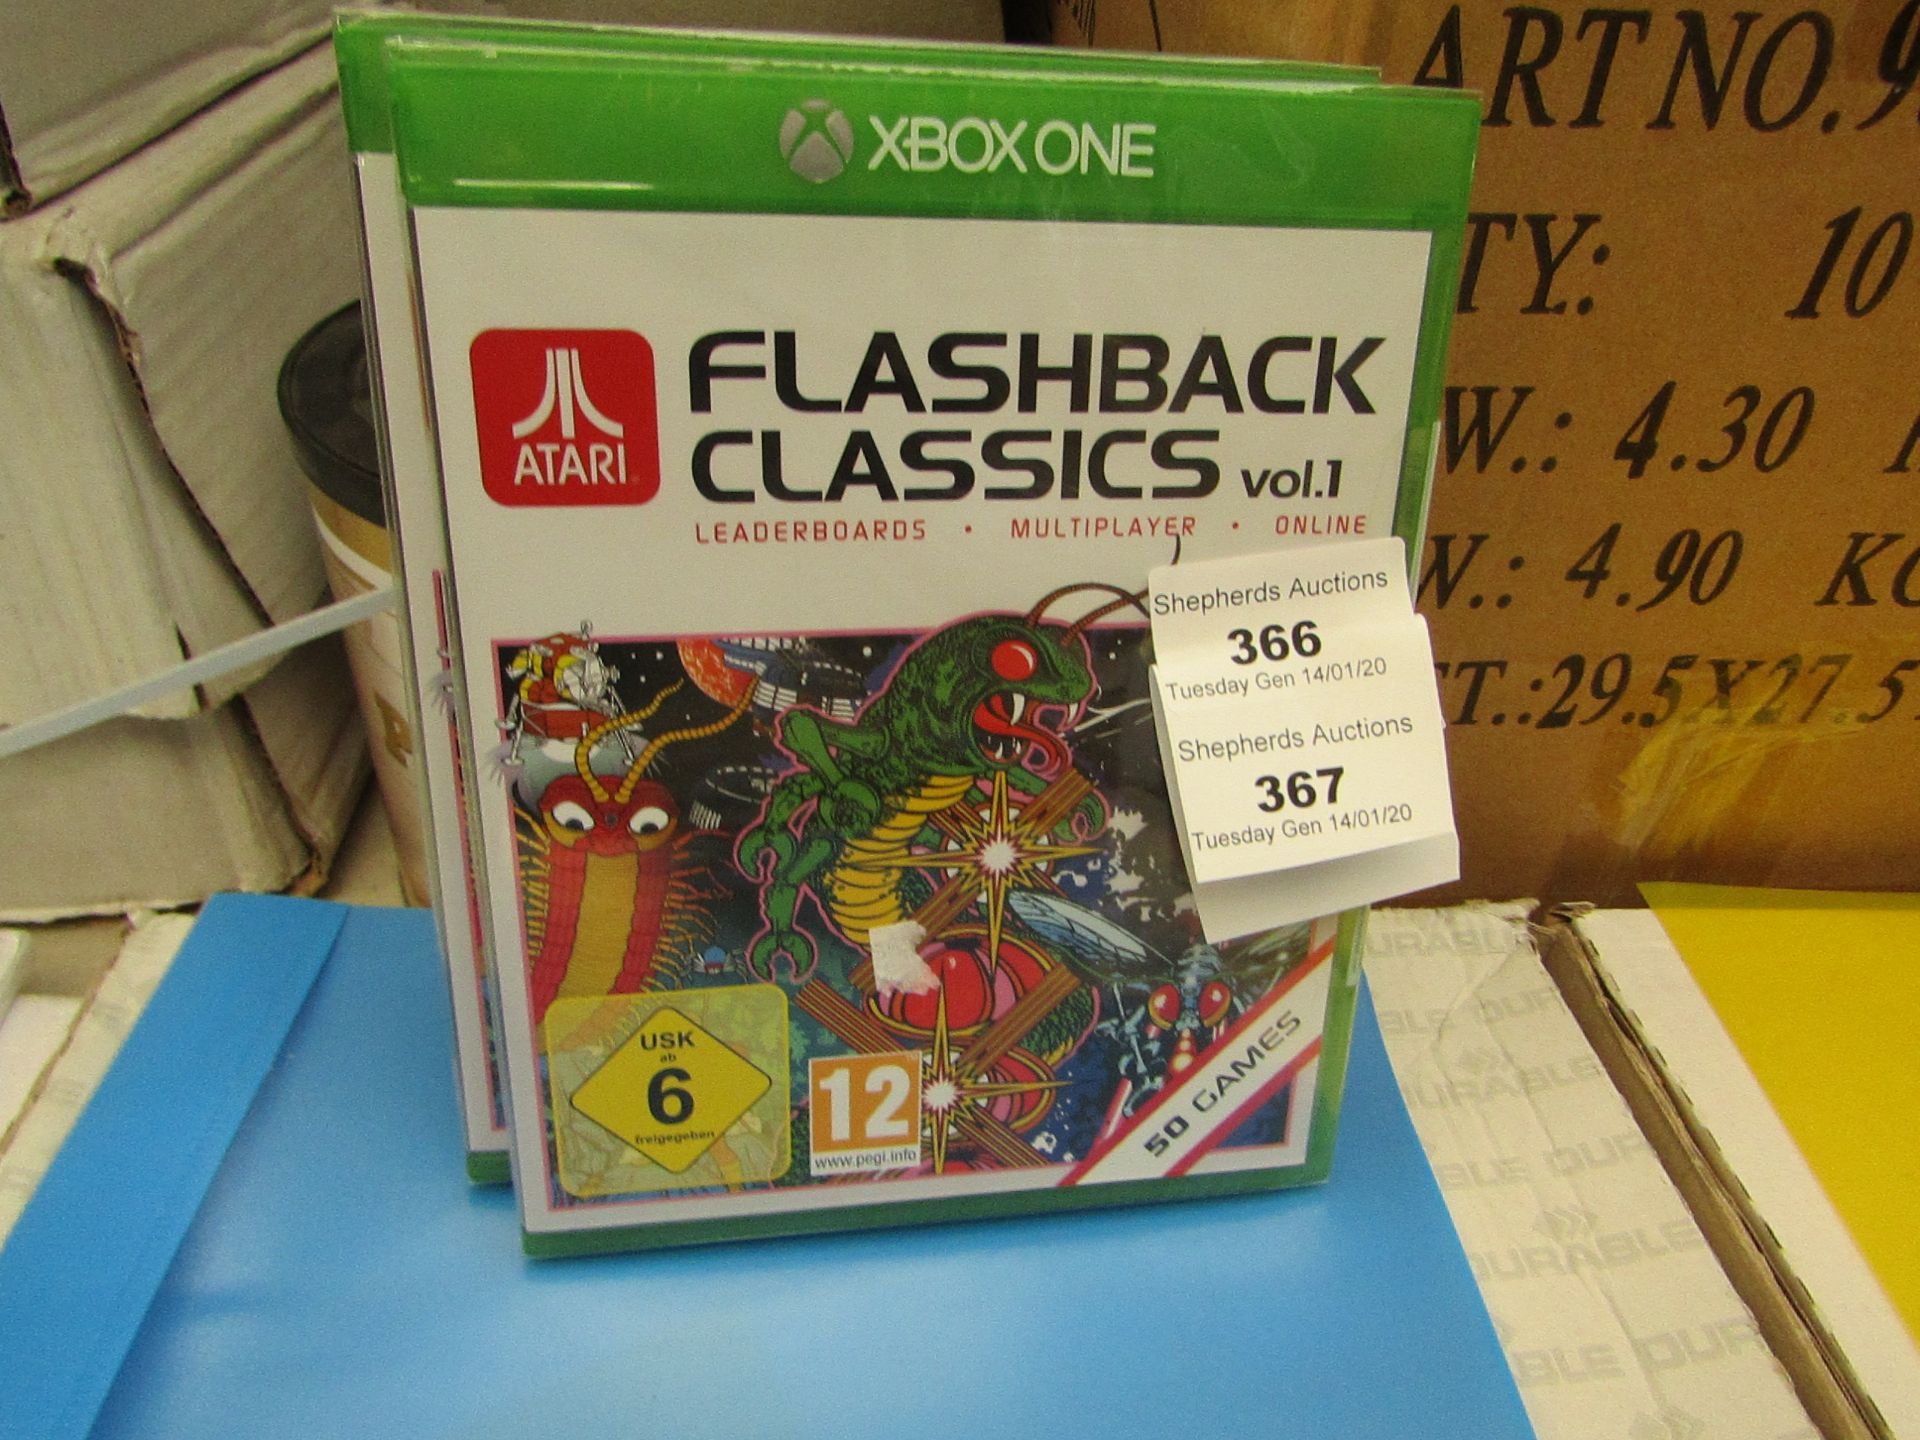 Atari Flash Back Classics Volume 1 for Xbox One, new